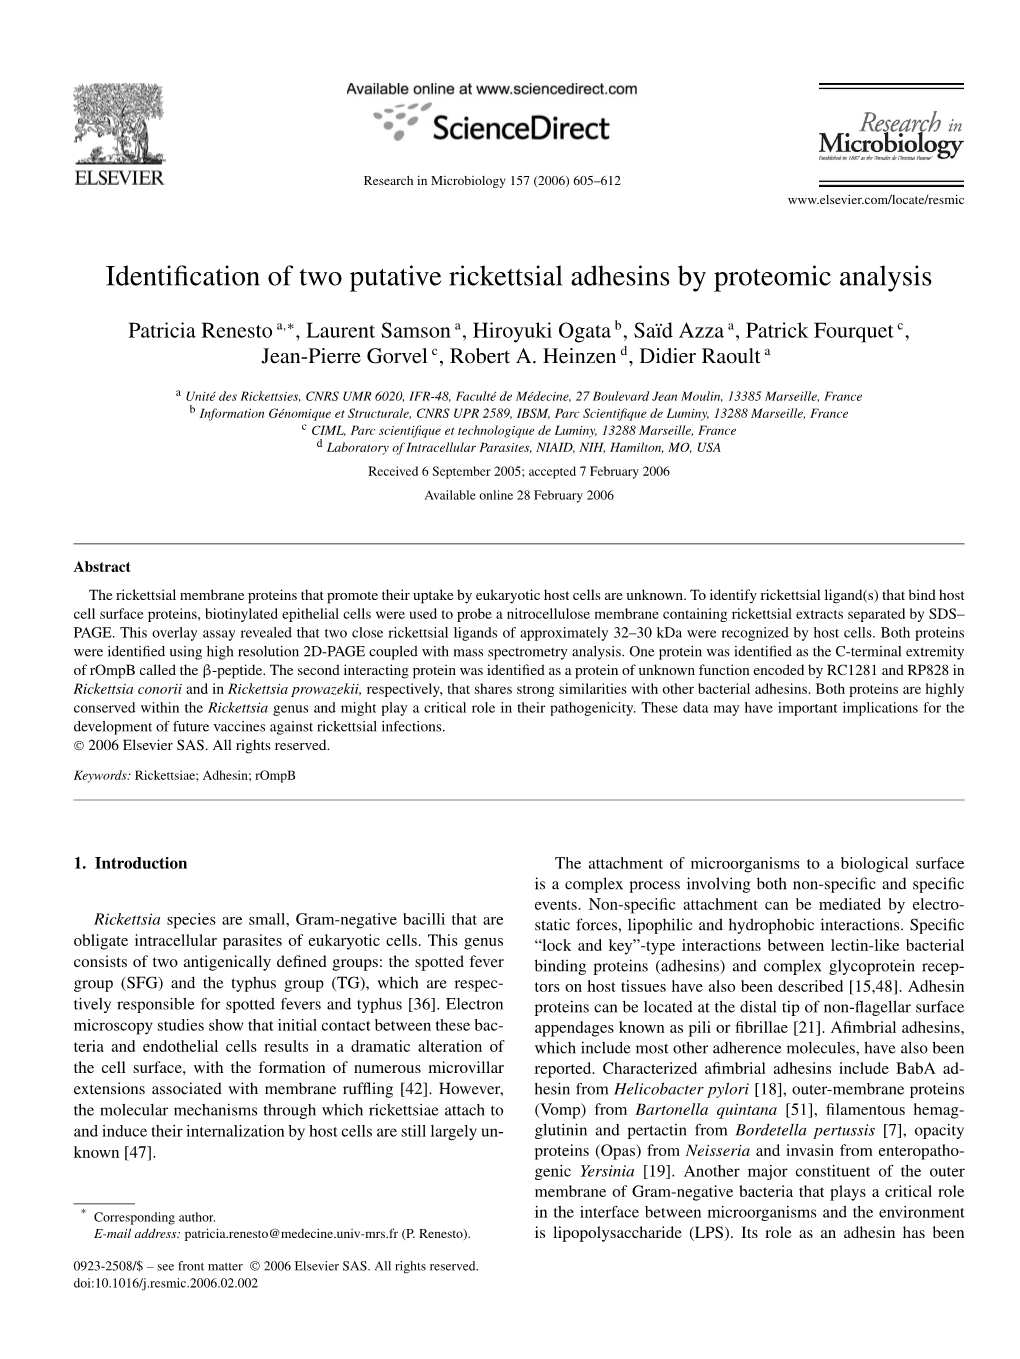 Identification of Two Putative Rickettsial Adhesins by Proteomic Analysis